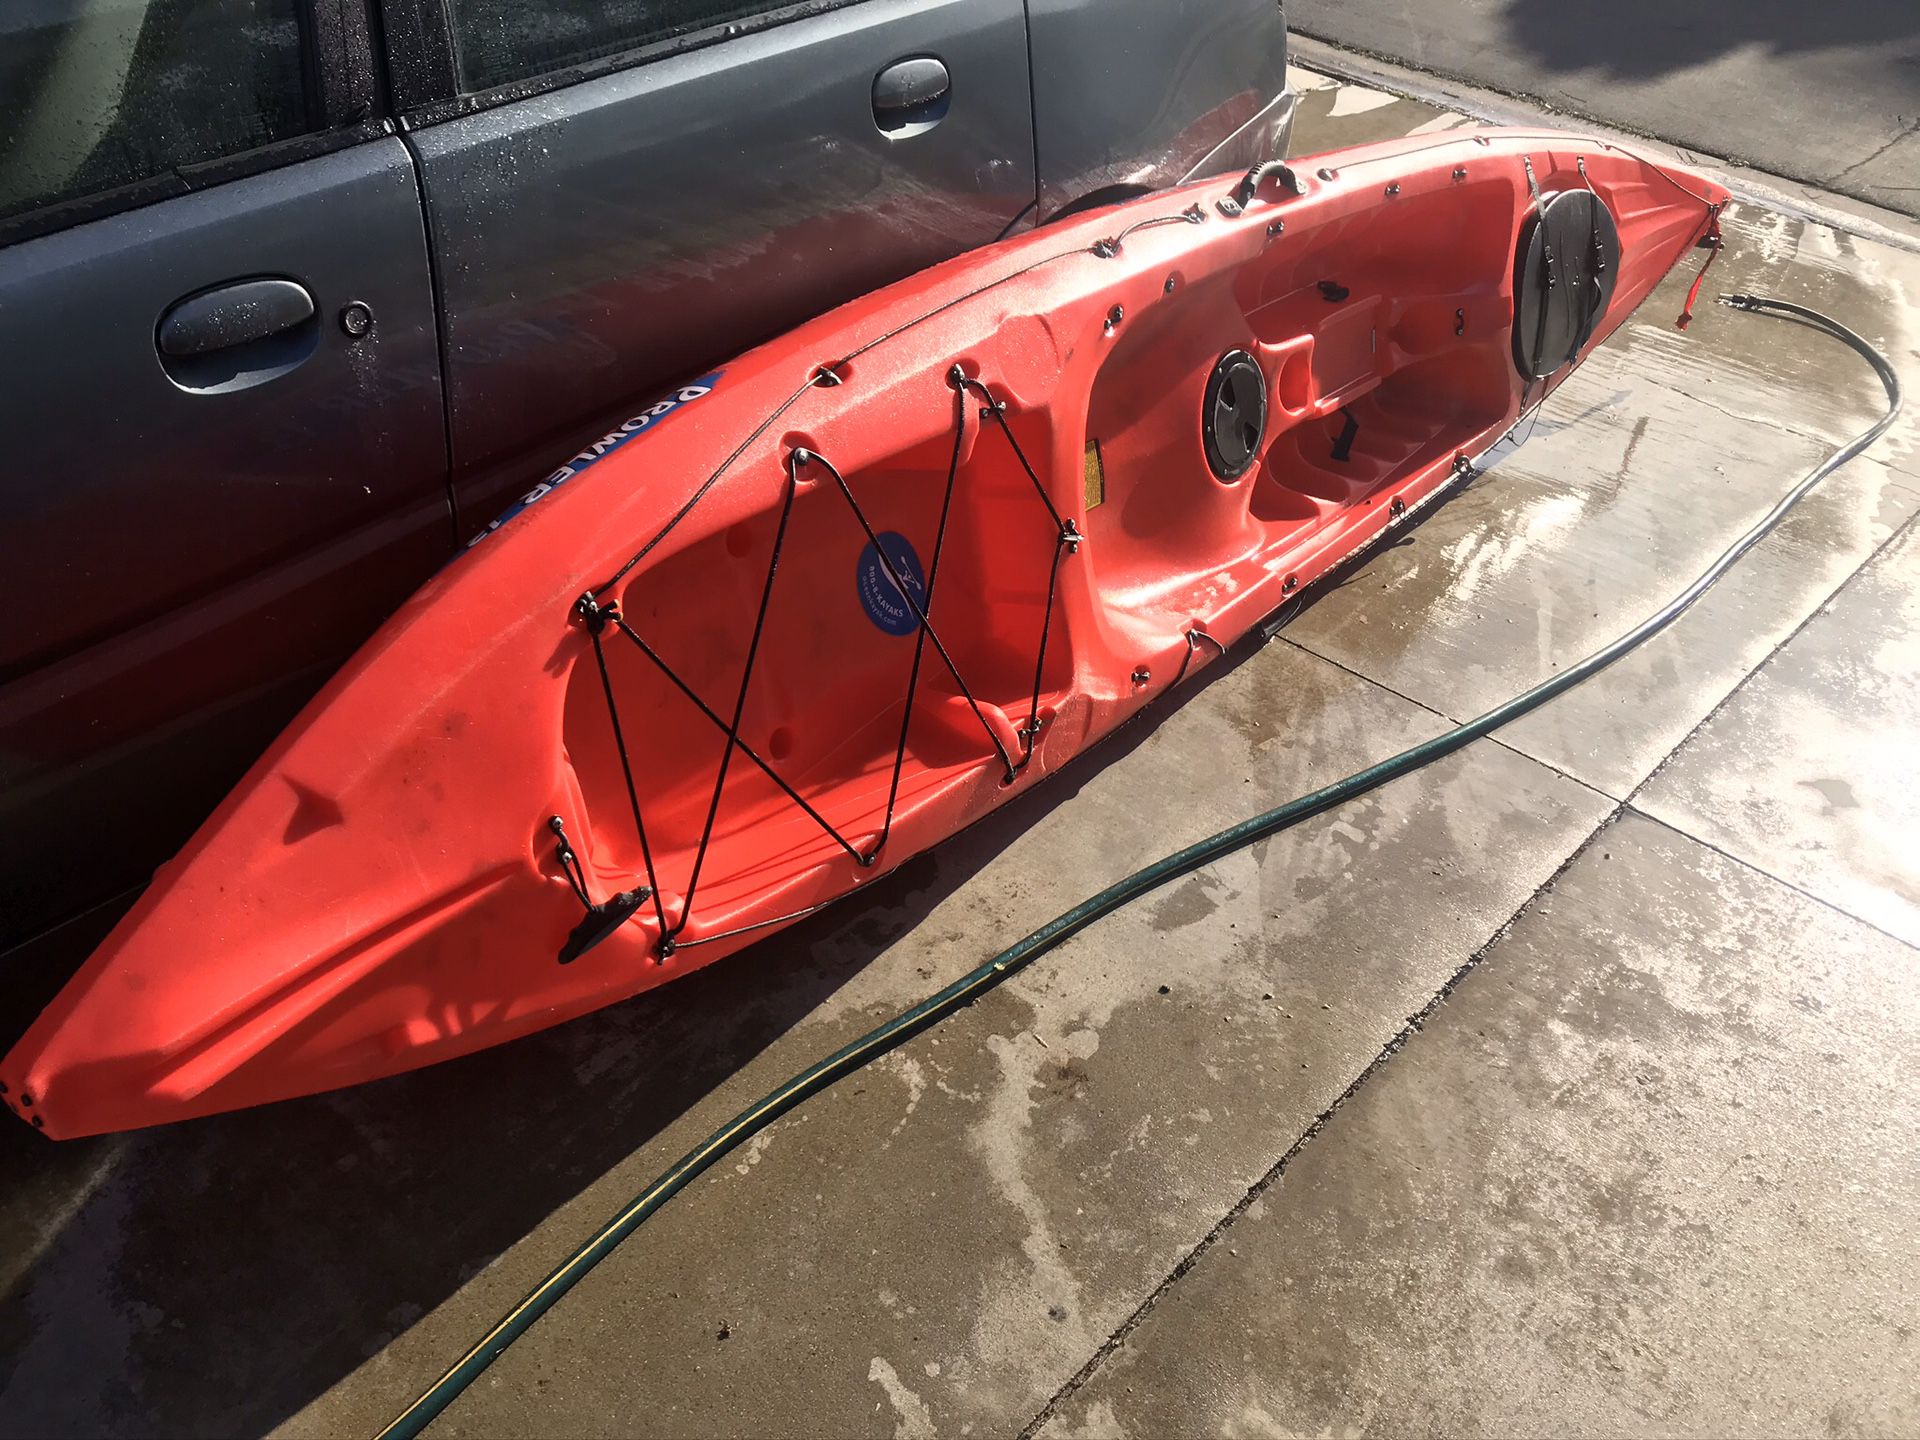 Ocean Kayak prowler 13, padded seat included